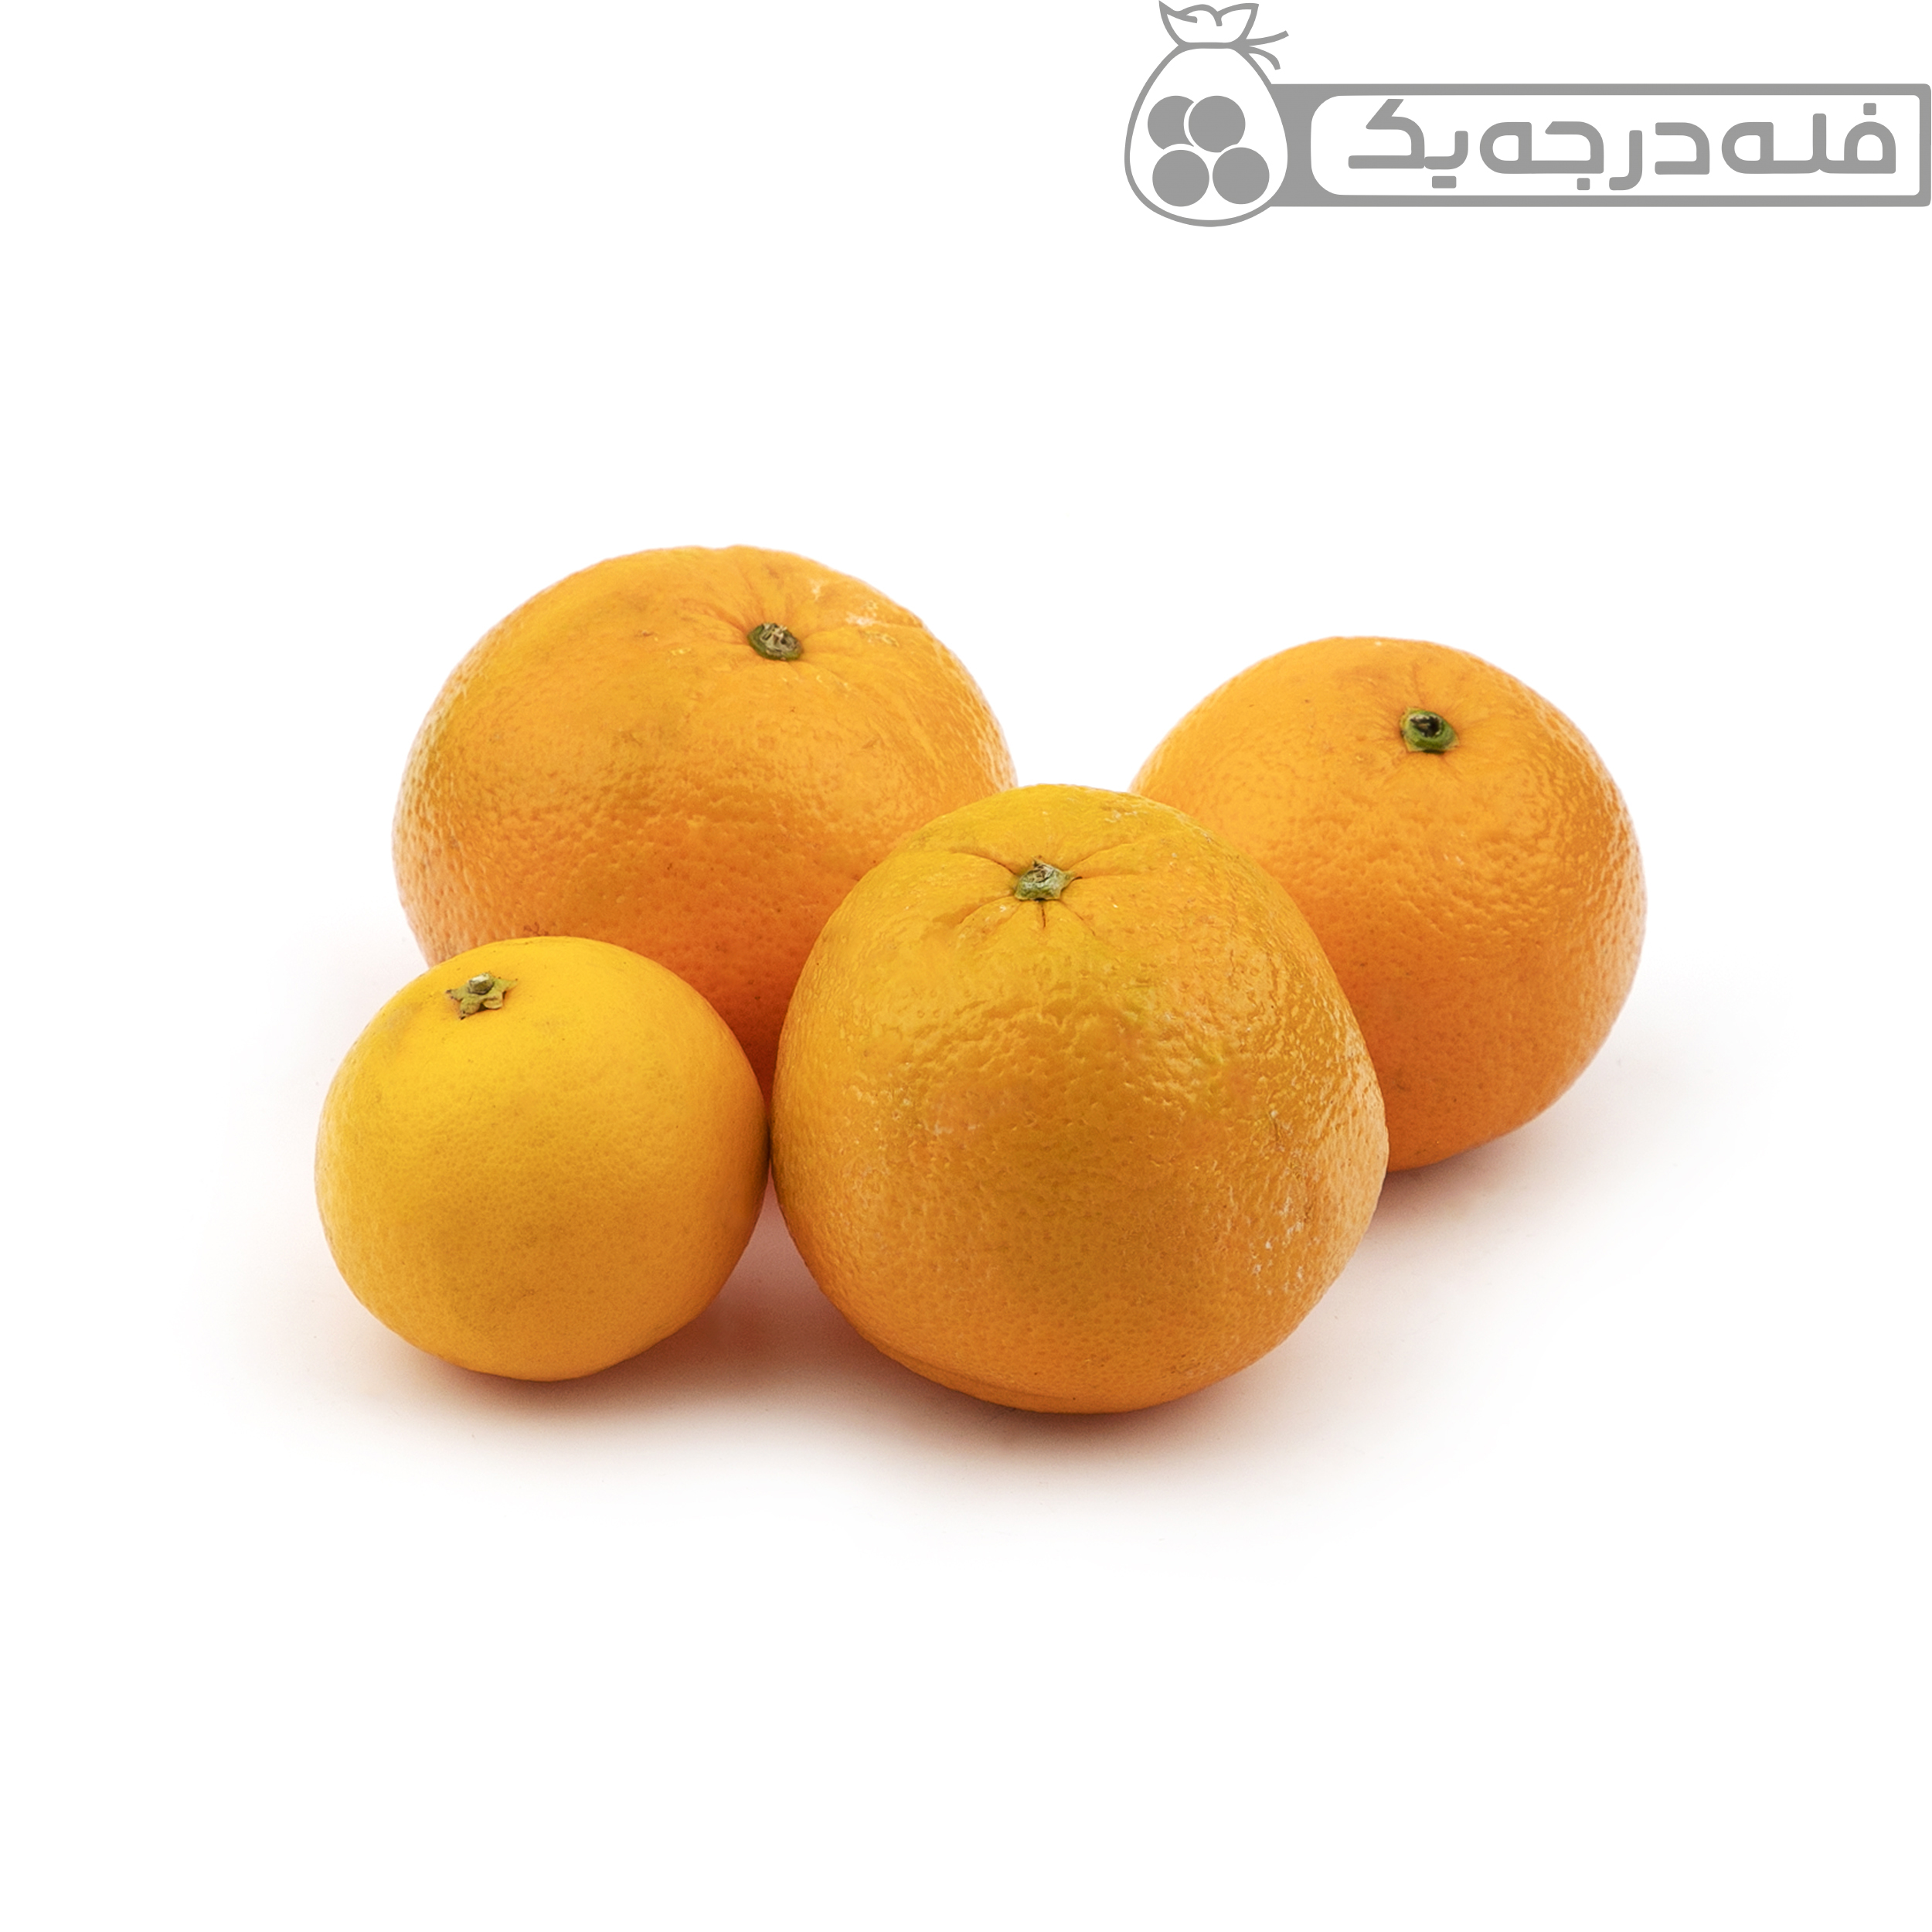 پرتقال تامسون شمال فله - 1 کیلوگرم 122653